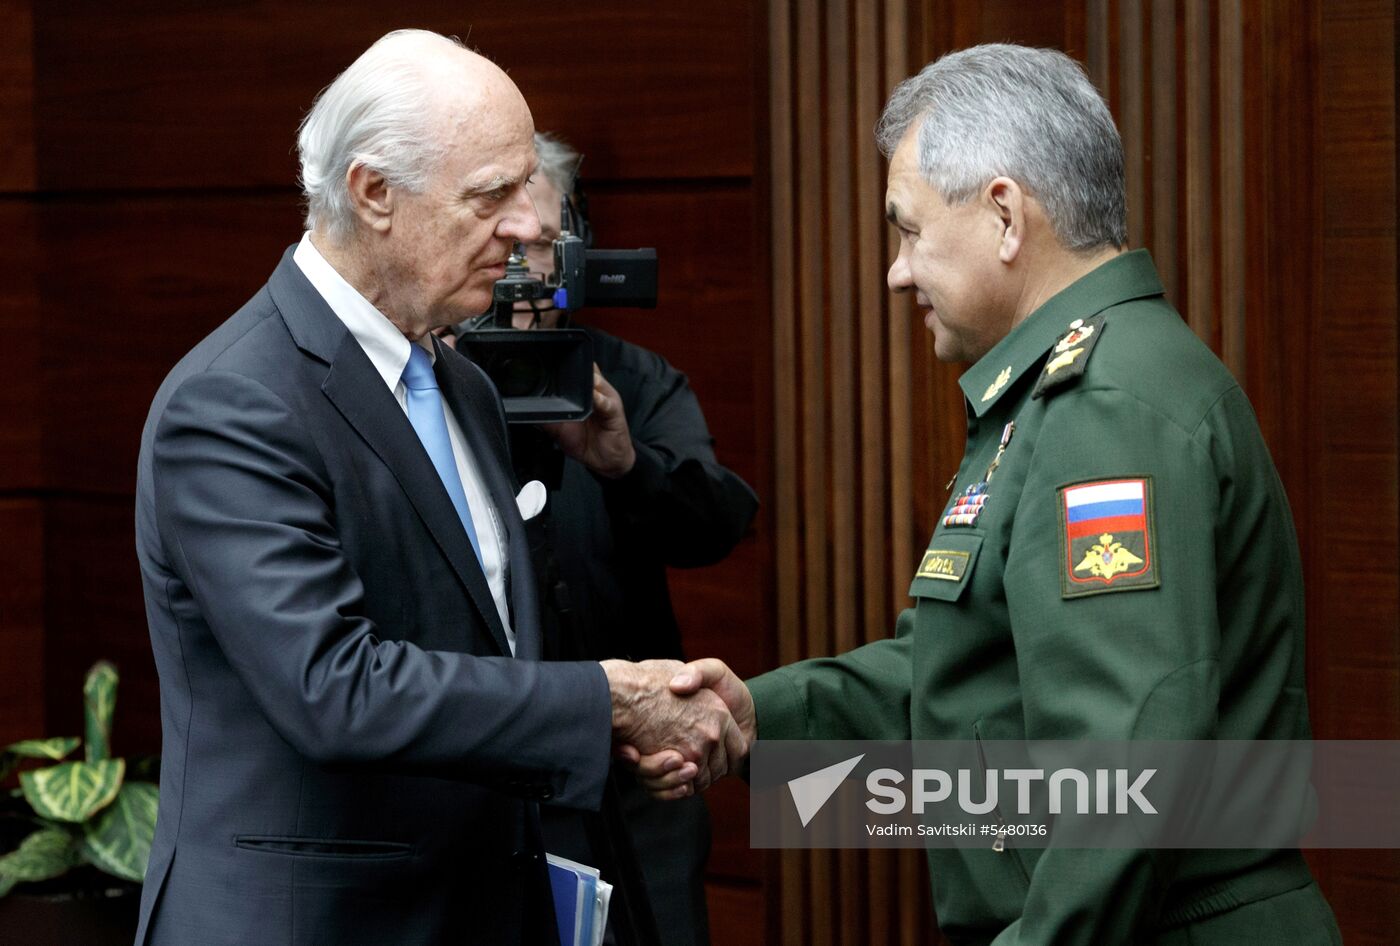 Russian Defense Minister Sergei Shoigu meets with UN Special Envoy for Syria Staffan de Mistura